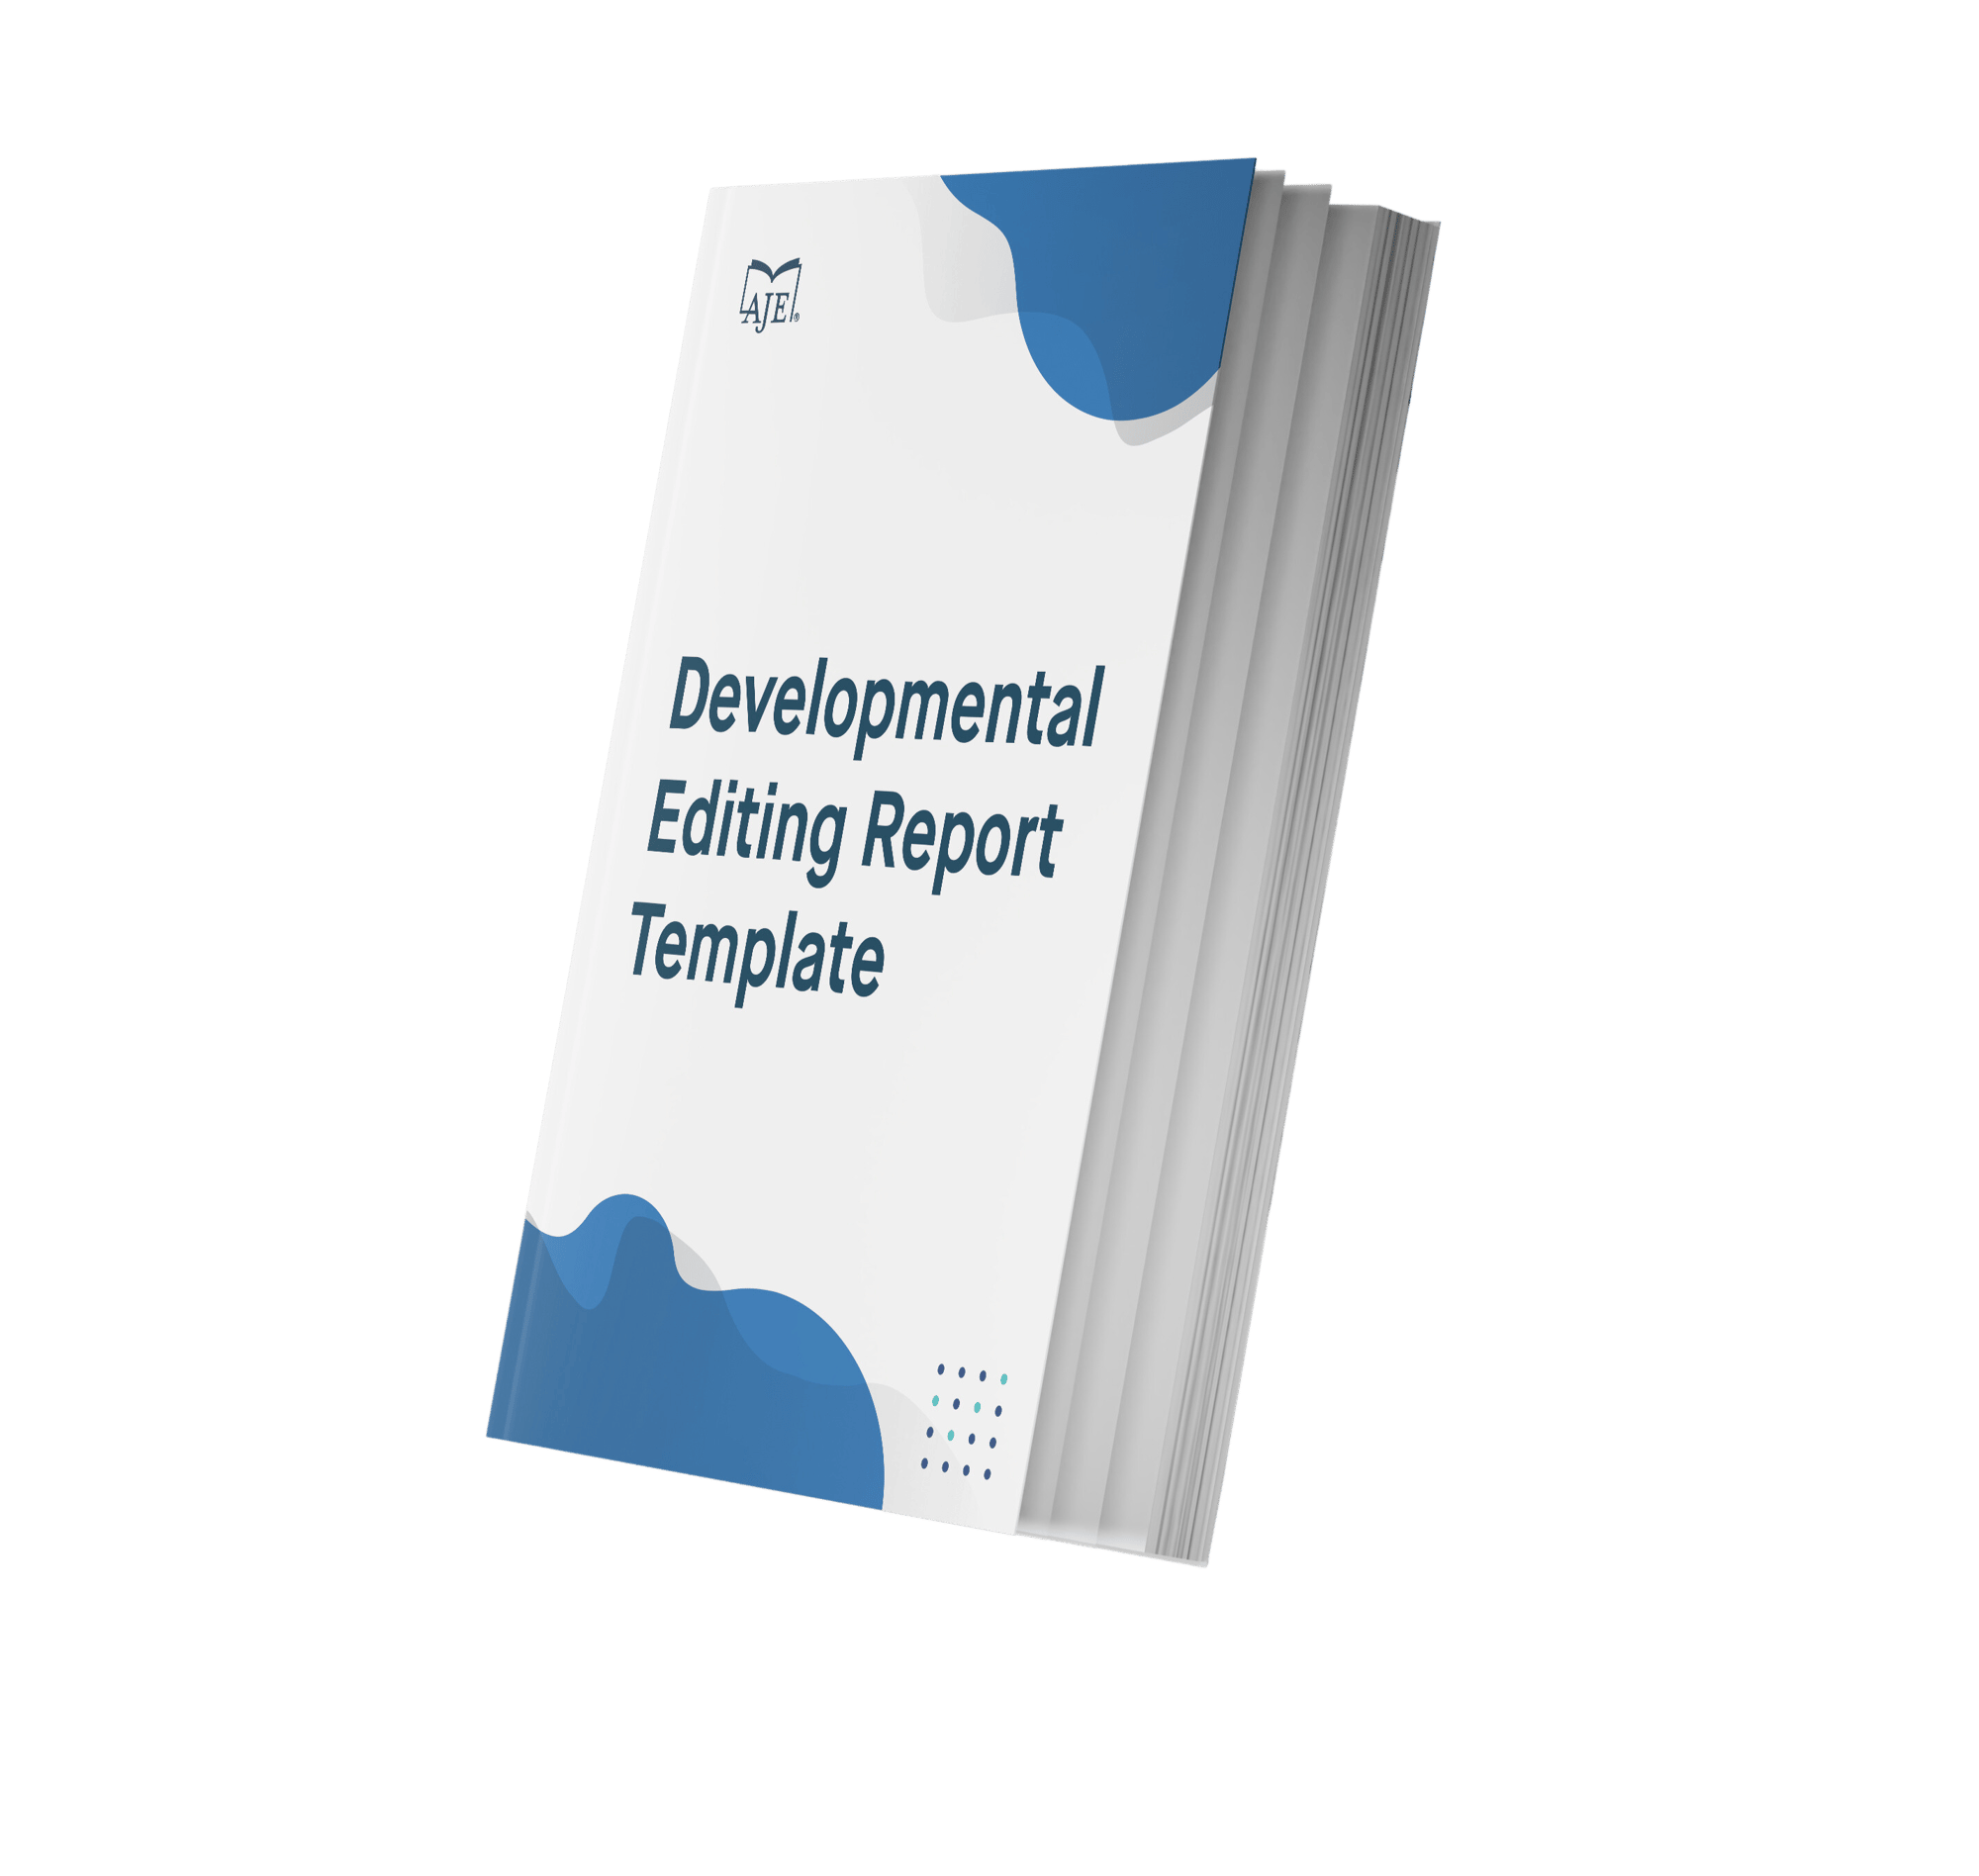 Developmental Editing Report Template - no shadow